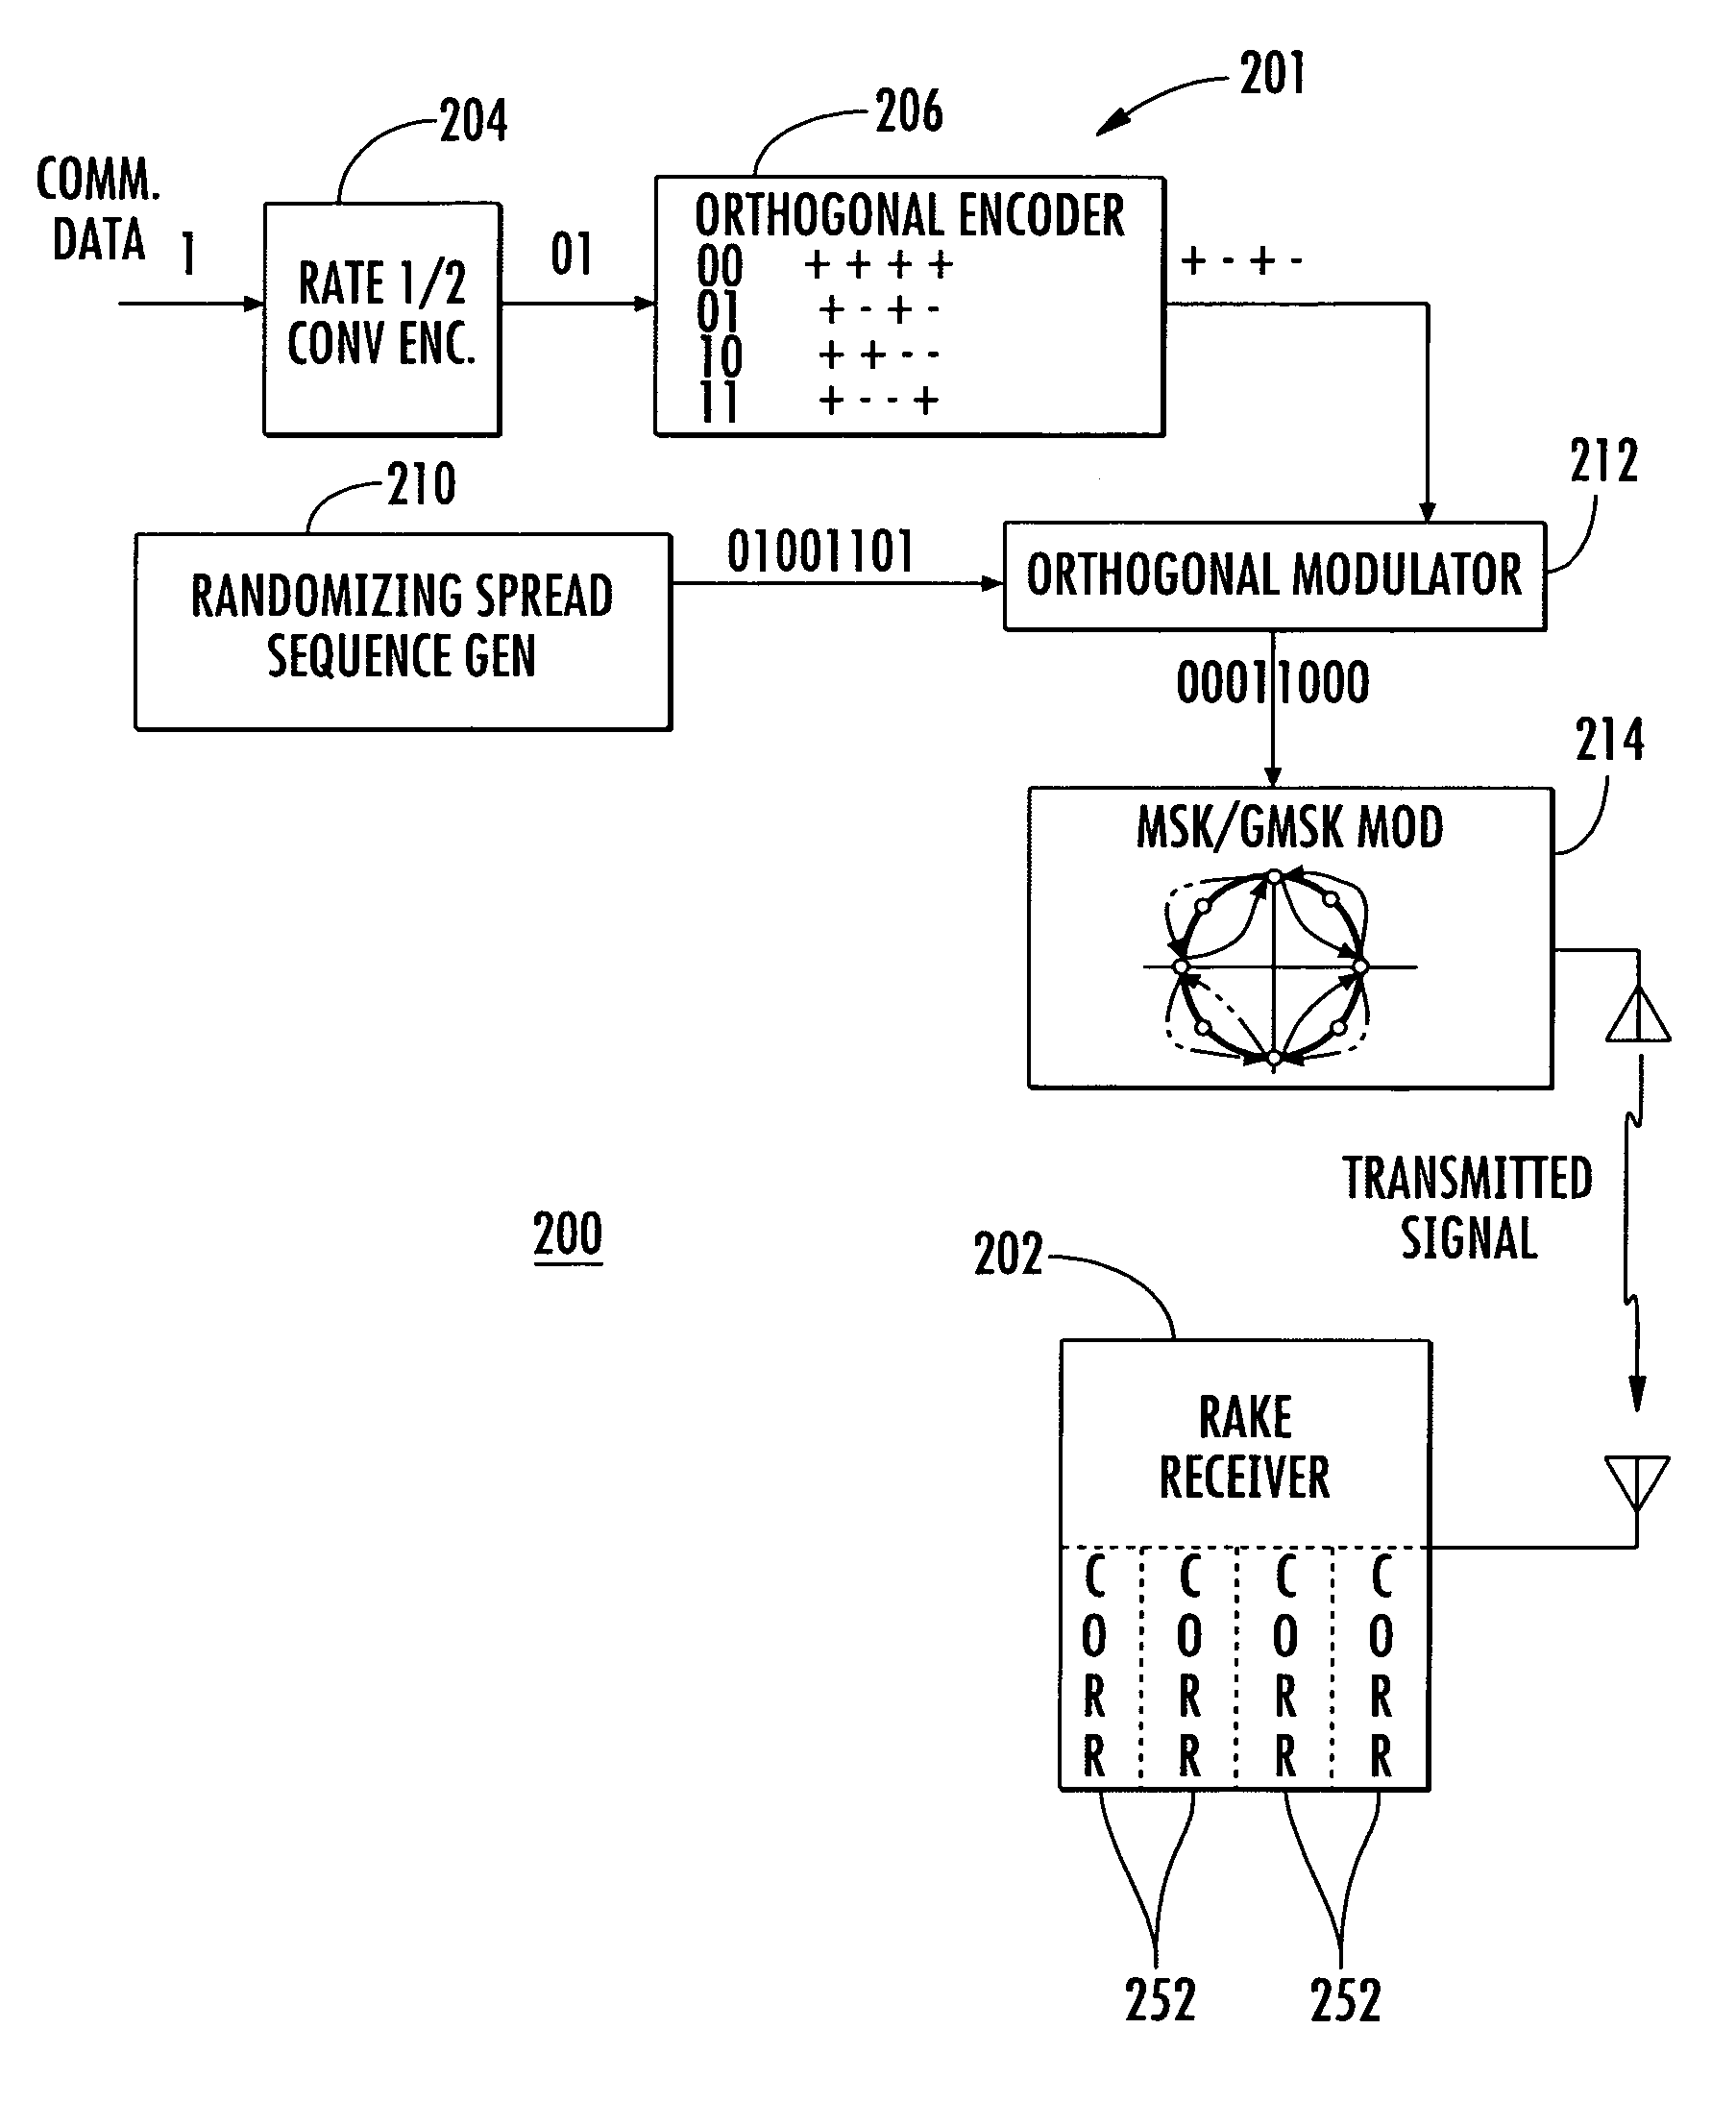 System and method for communicating data using constant amplitude waveform with hybrid orthogonal and MSK or GMSK modulation